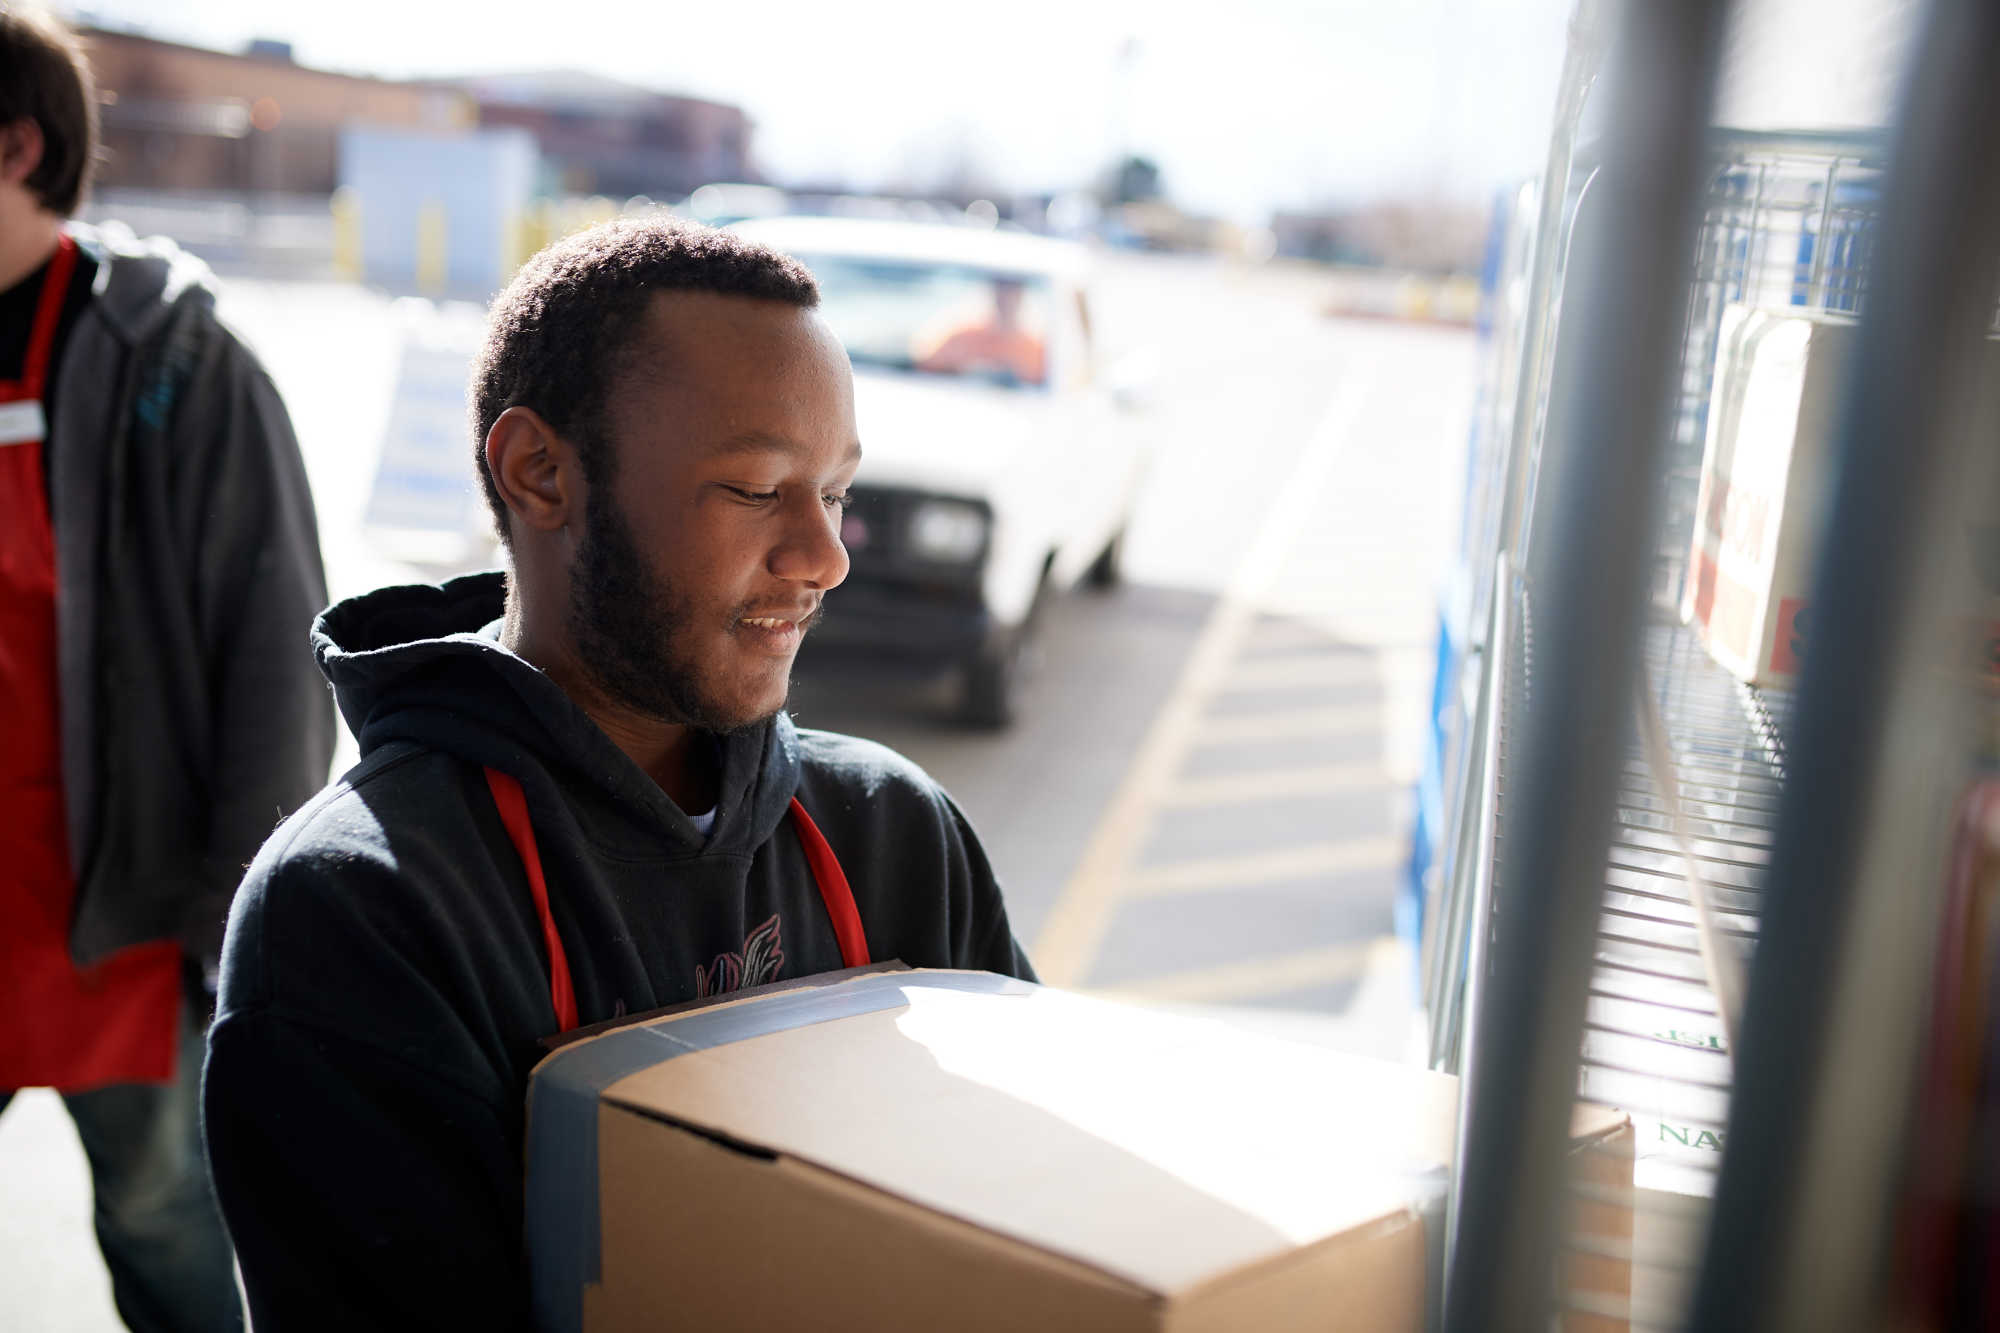 A Deseret Industries associate unloads a box of donated goods from a car.